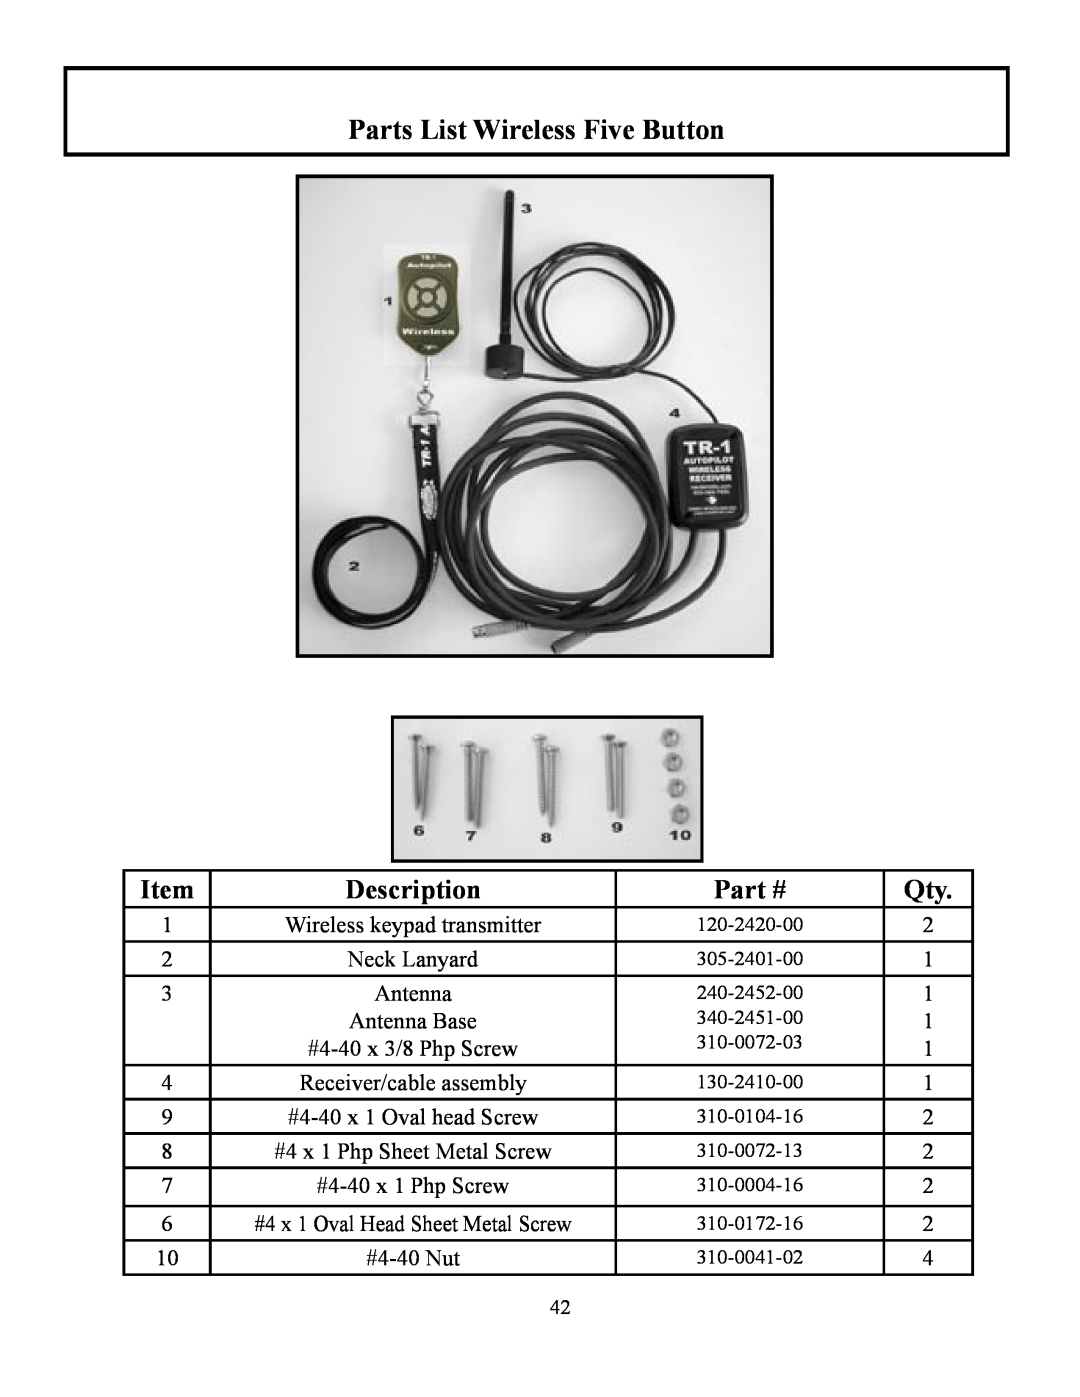 Garmin TR-1 Parts List Wireless Five Button, Description, Wireless keypad transmitter, Neck Lanyard, Antenna Base 